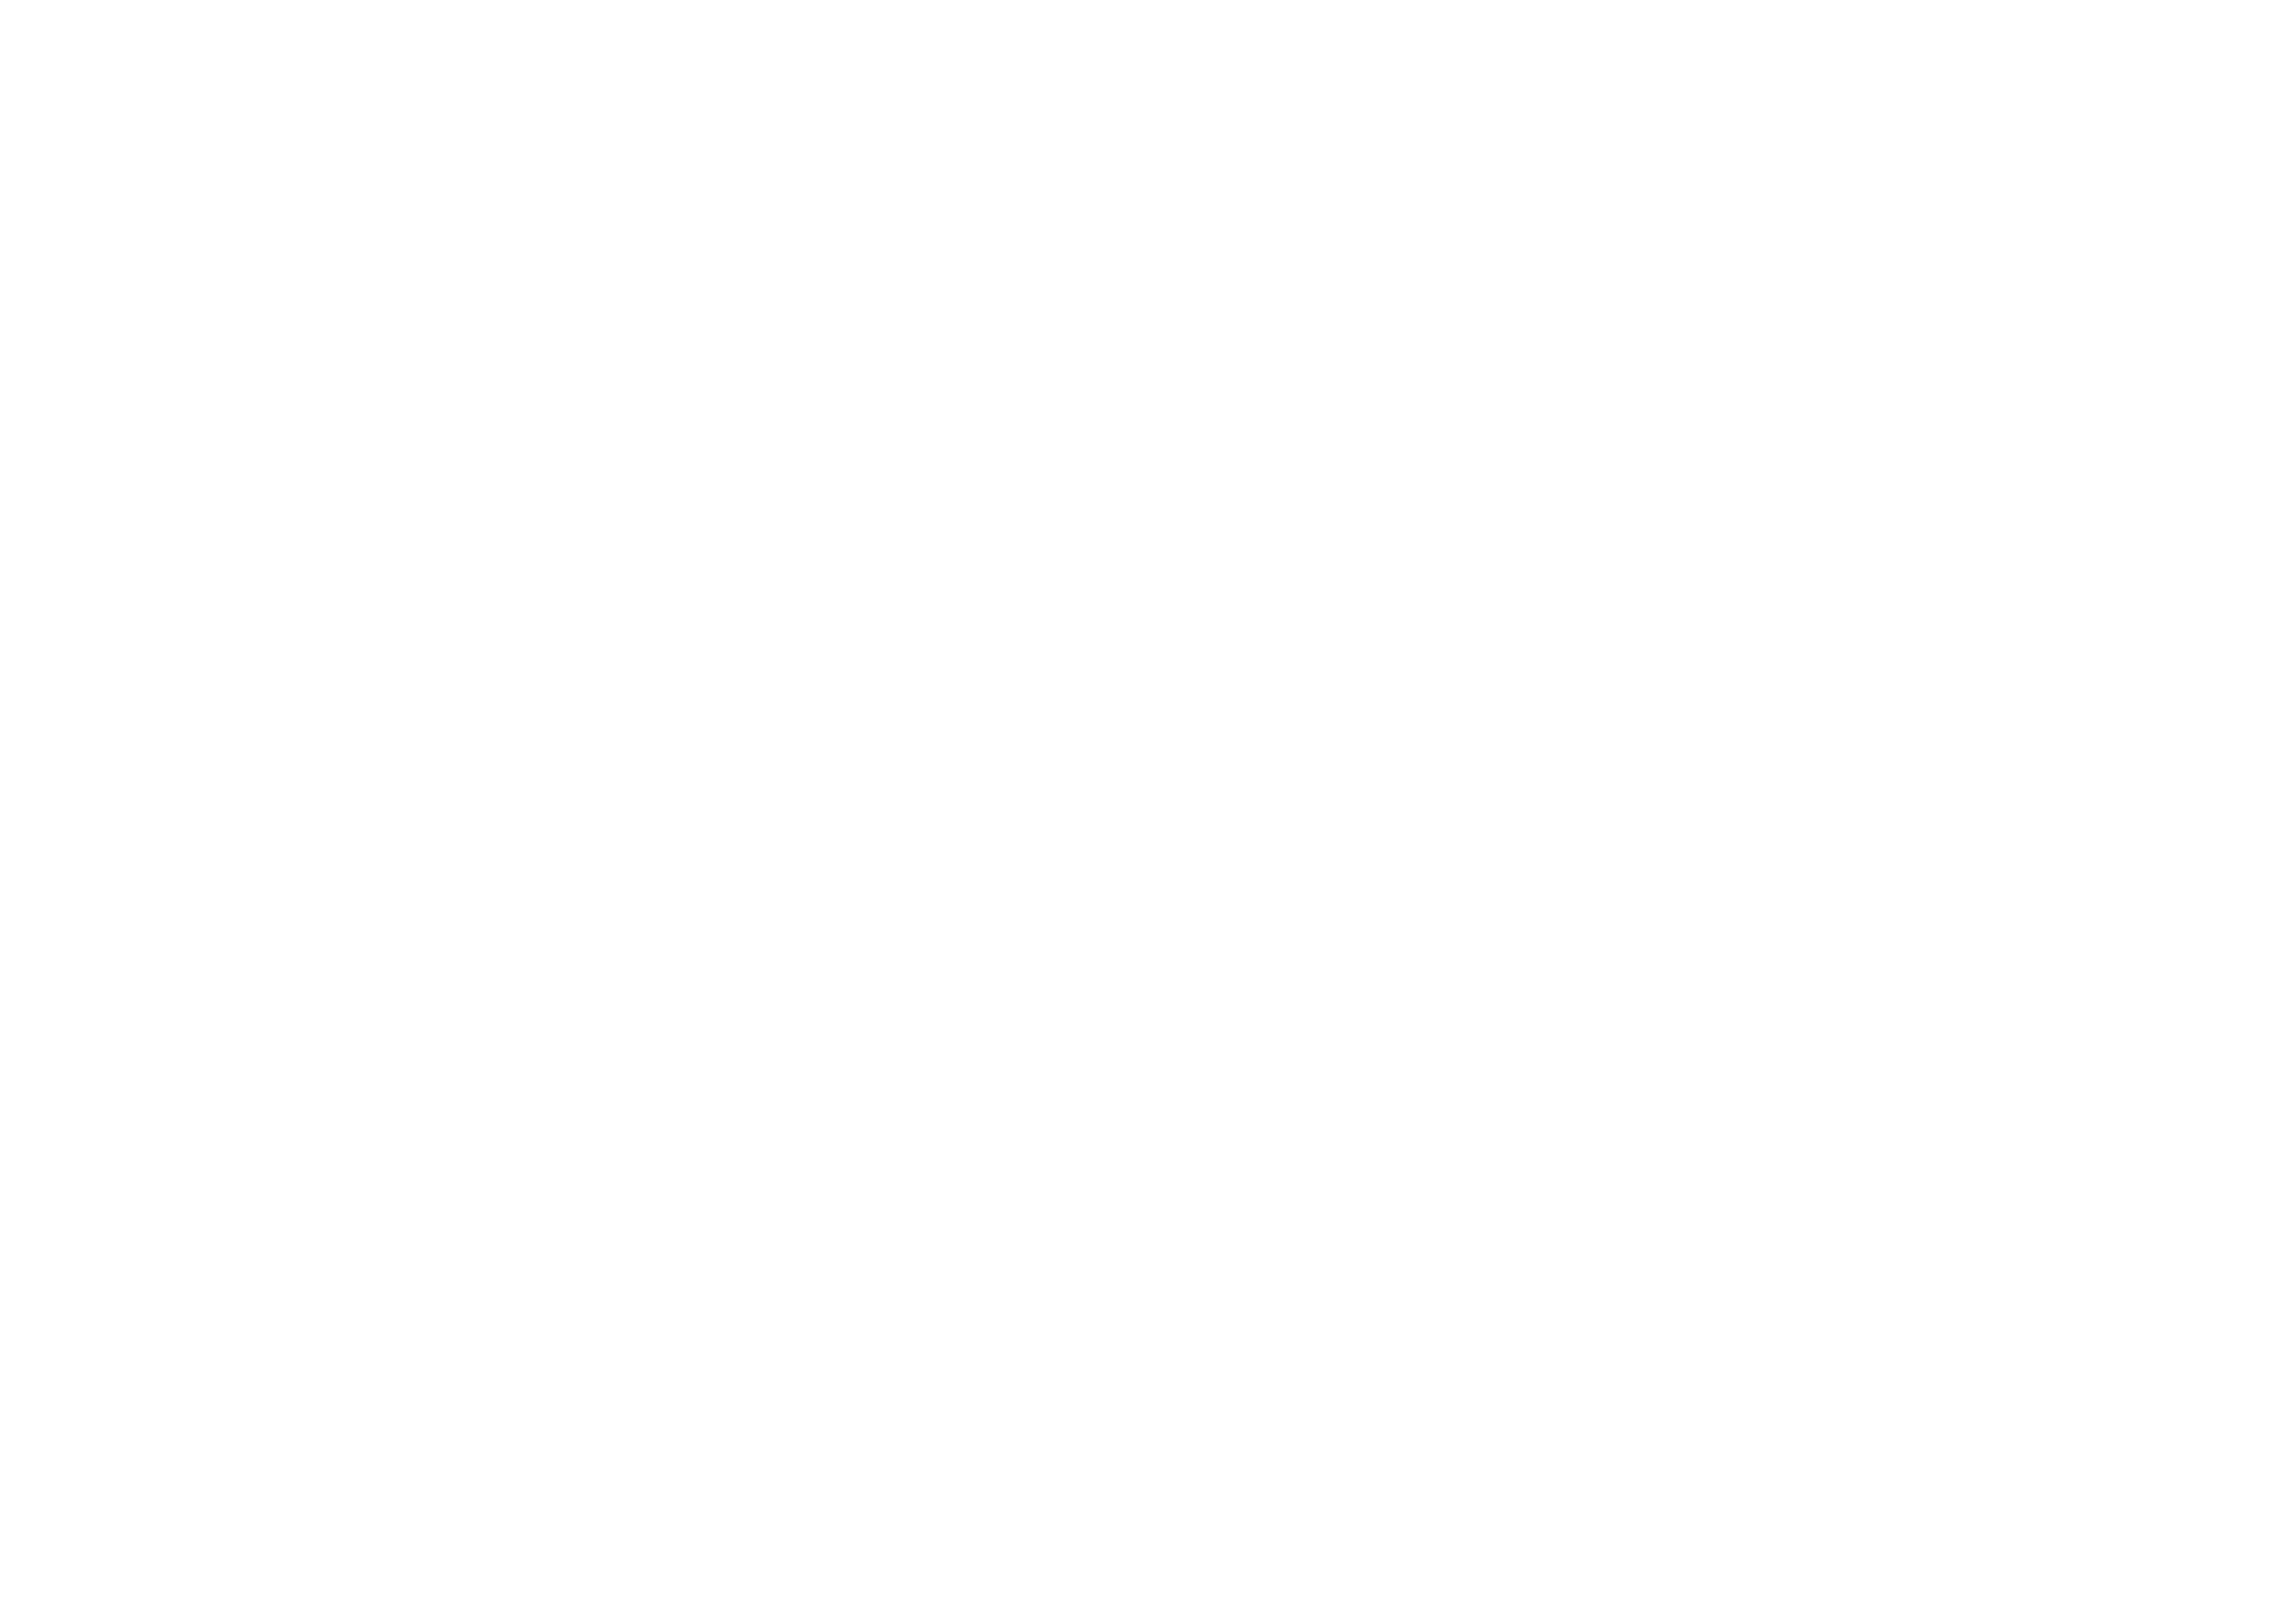 RinconAguilar